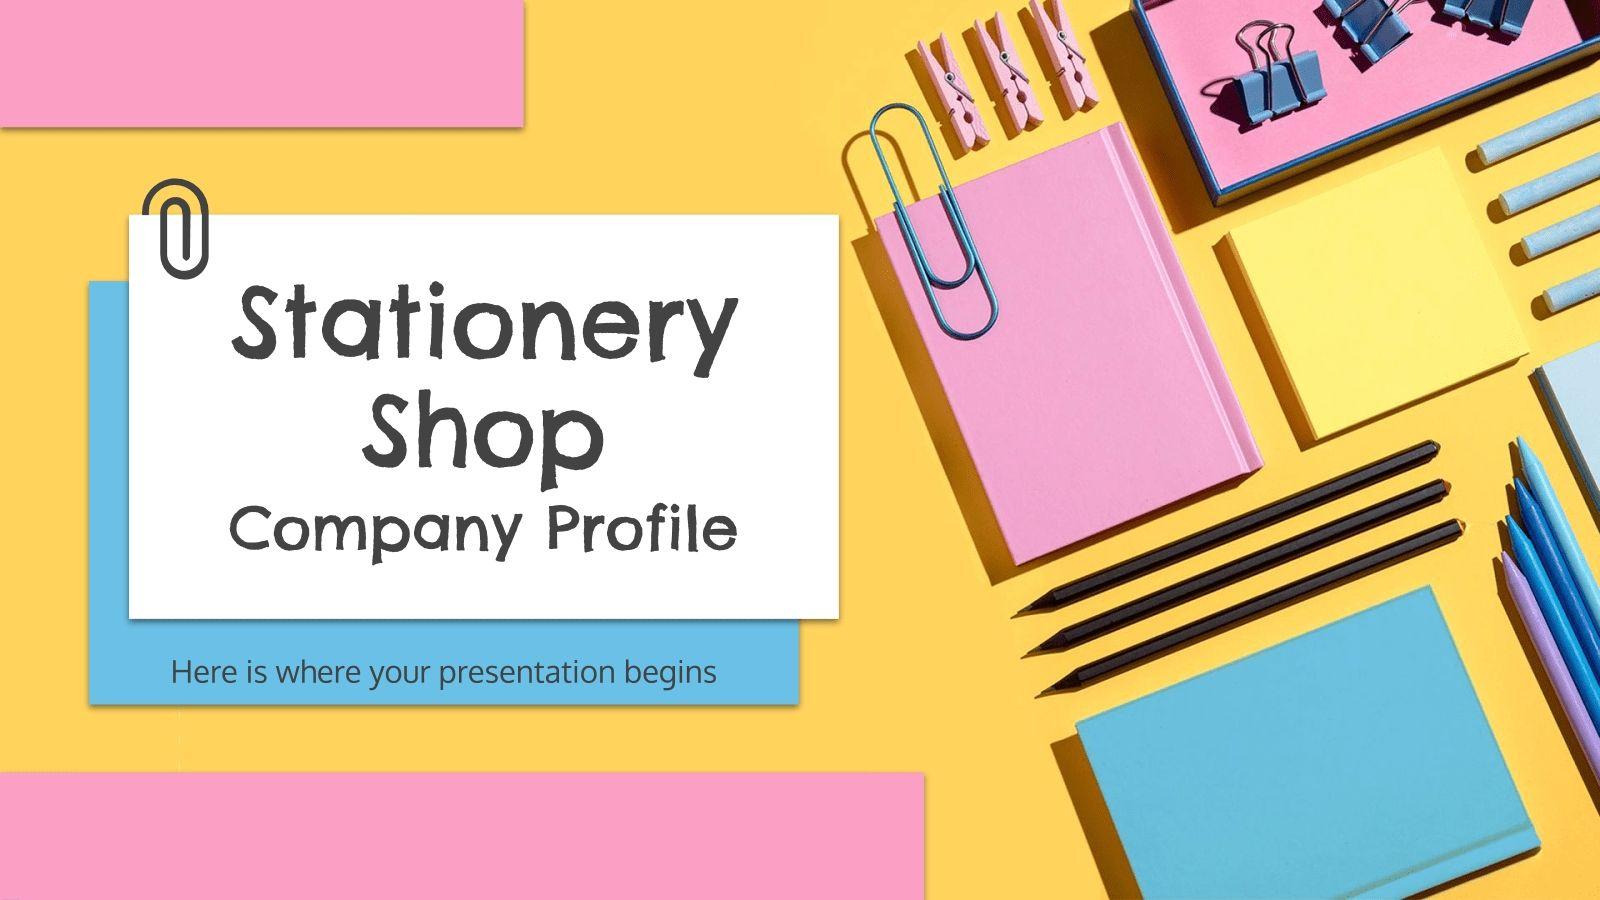 Stationery Shop Company Profile Presentation